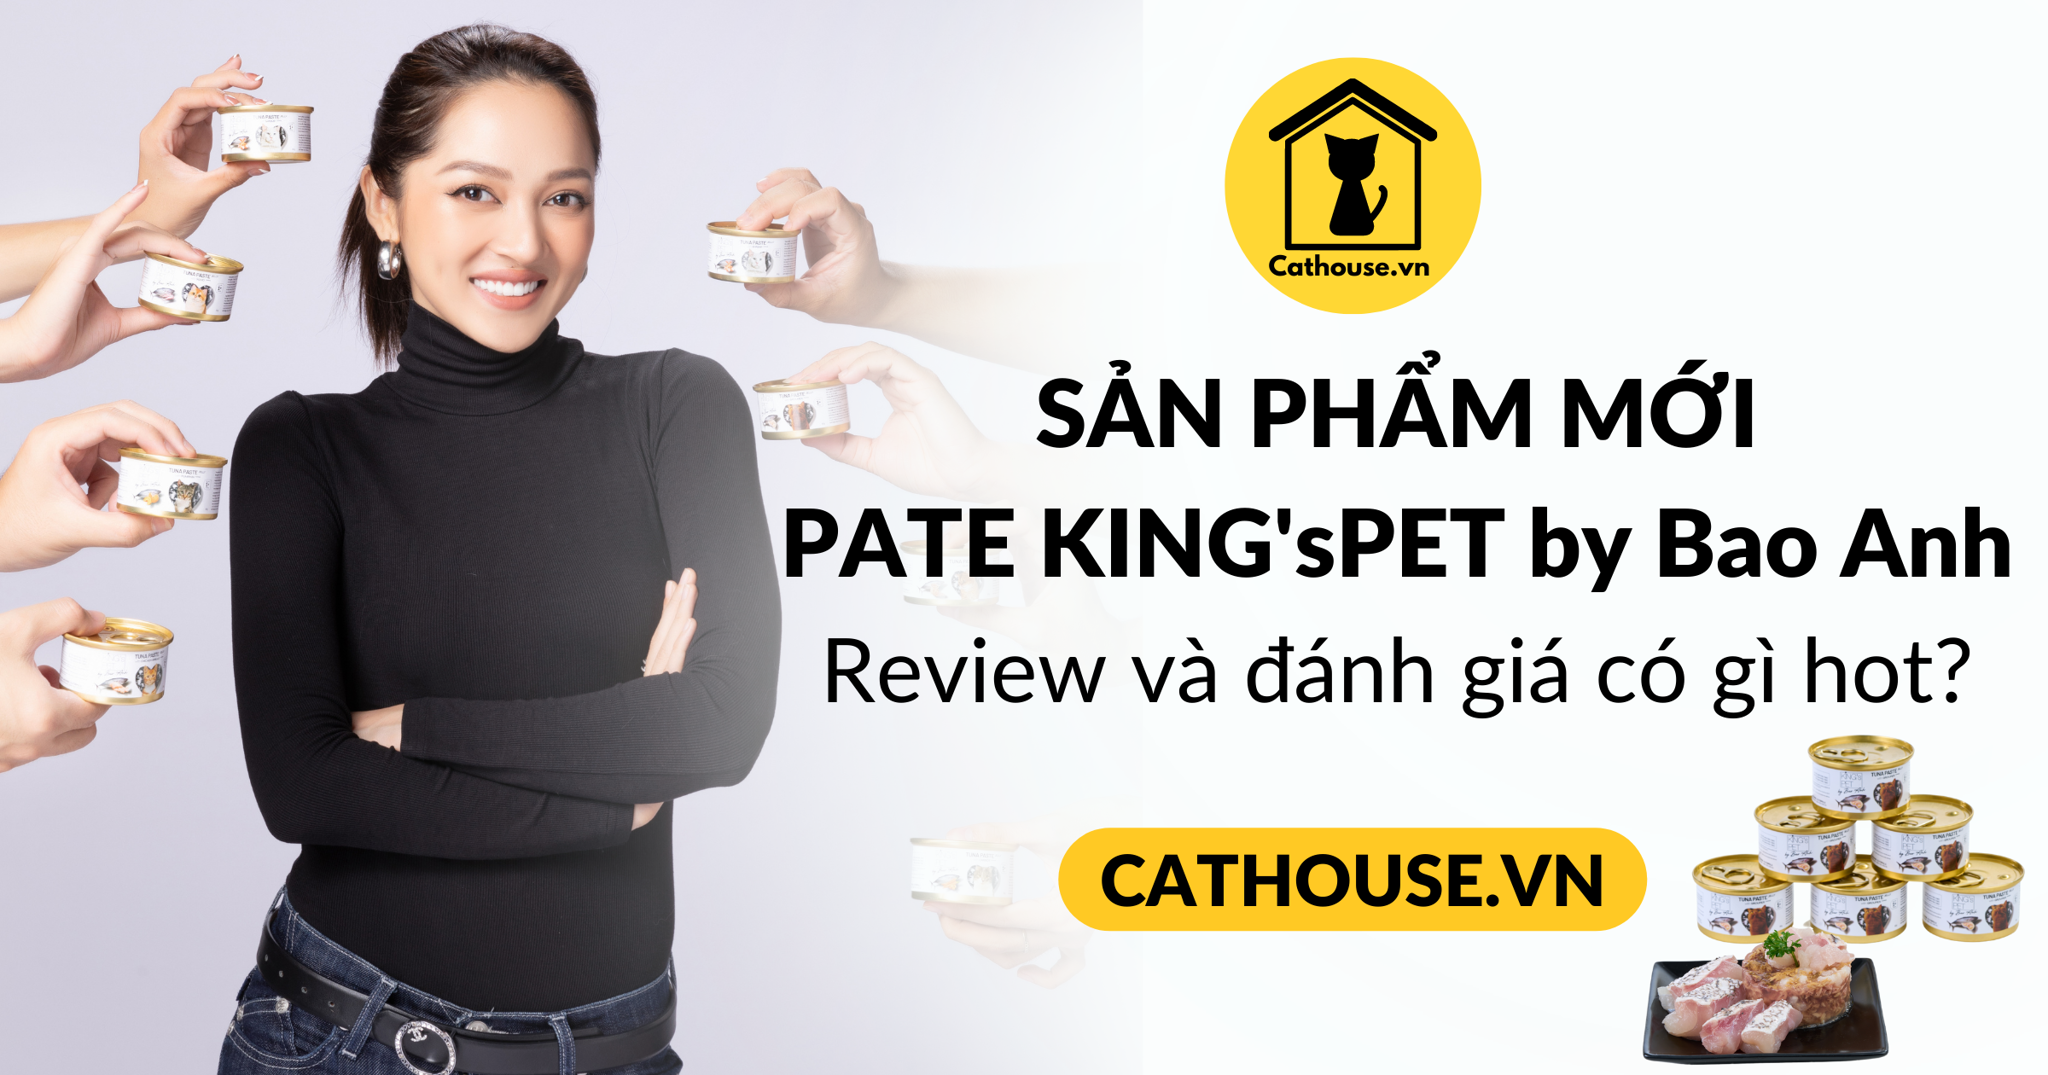 REVIEW PATE KING’S PET BY BAO ANH CÓ GÌ HOT?